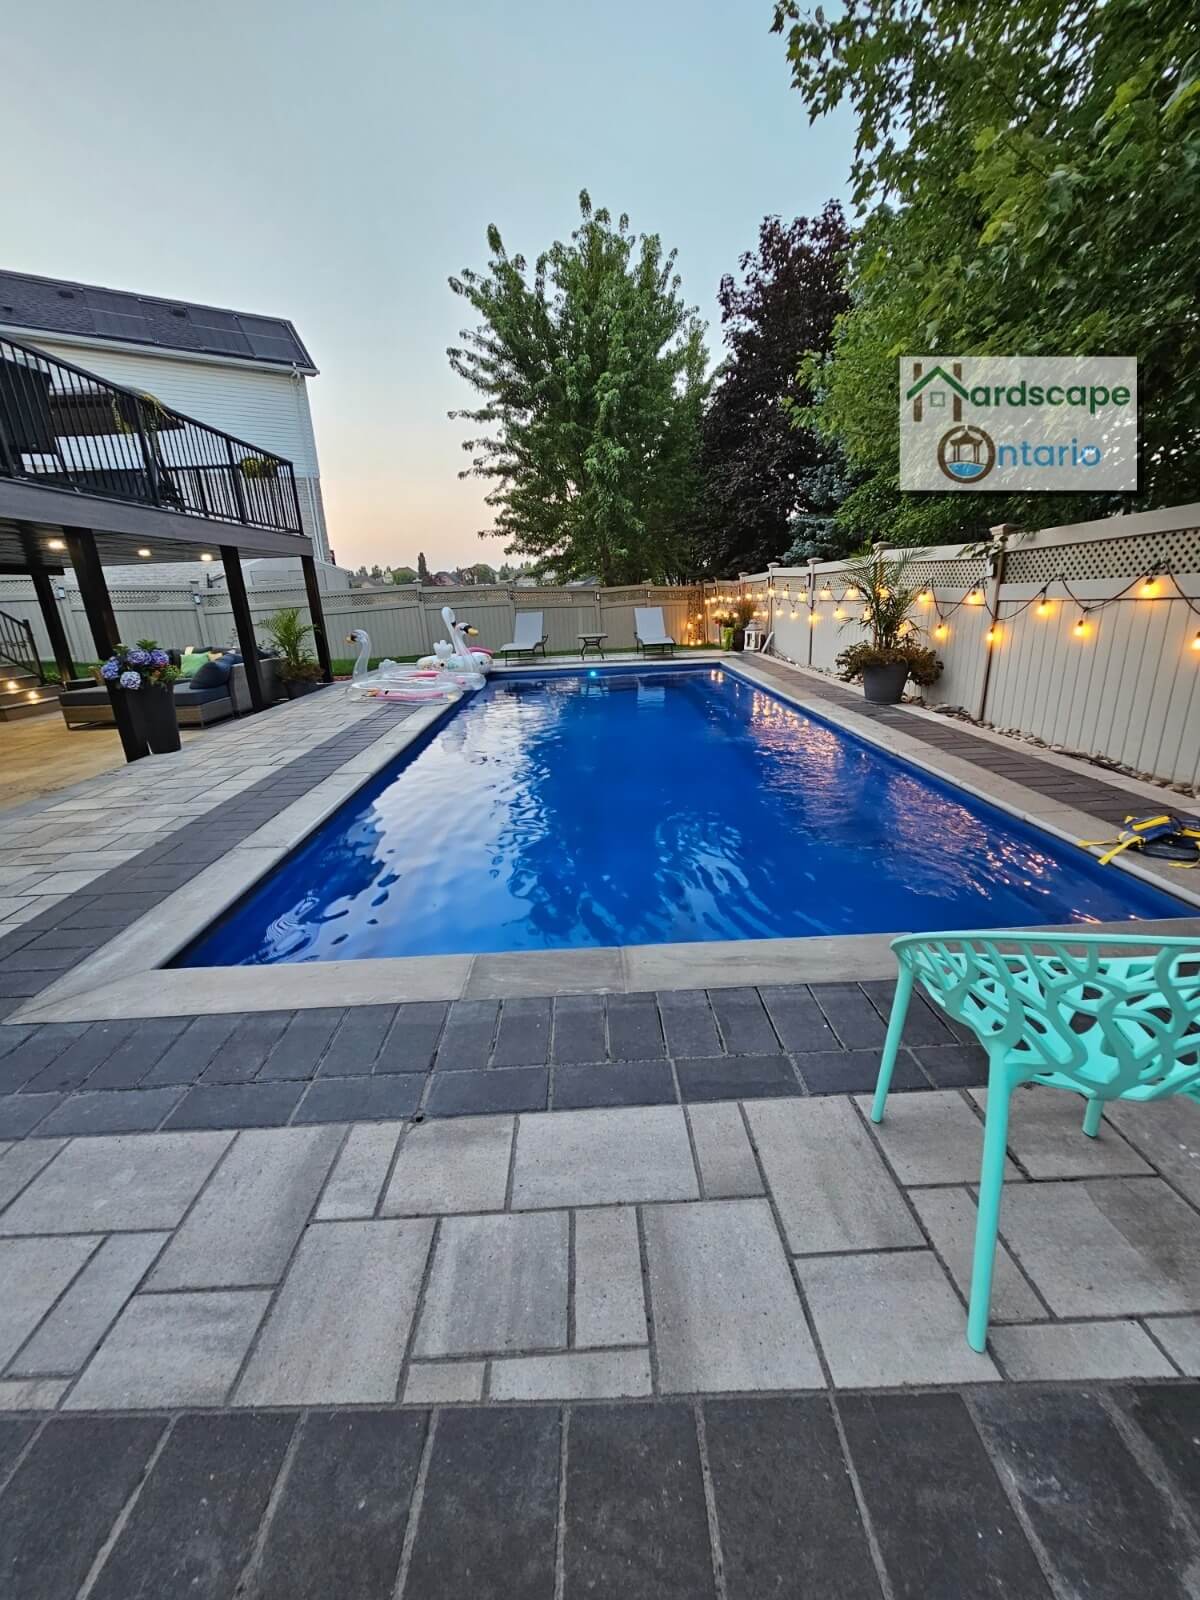 Beautifully designed backyard swimming pool with interlocking surrounding